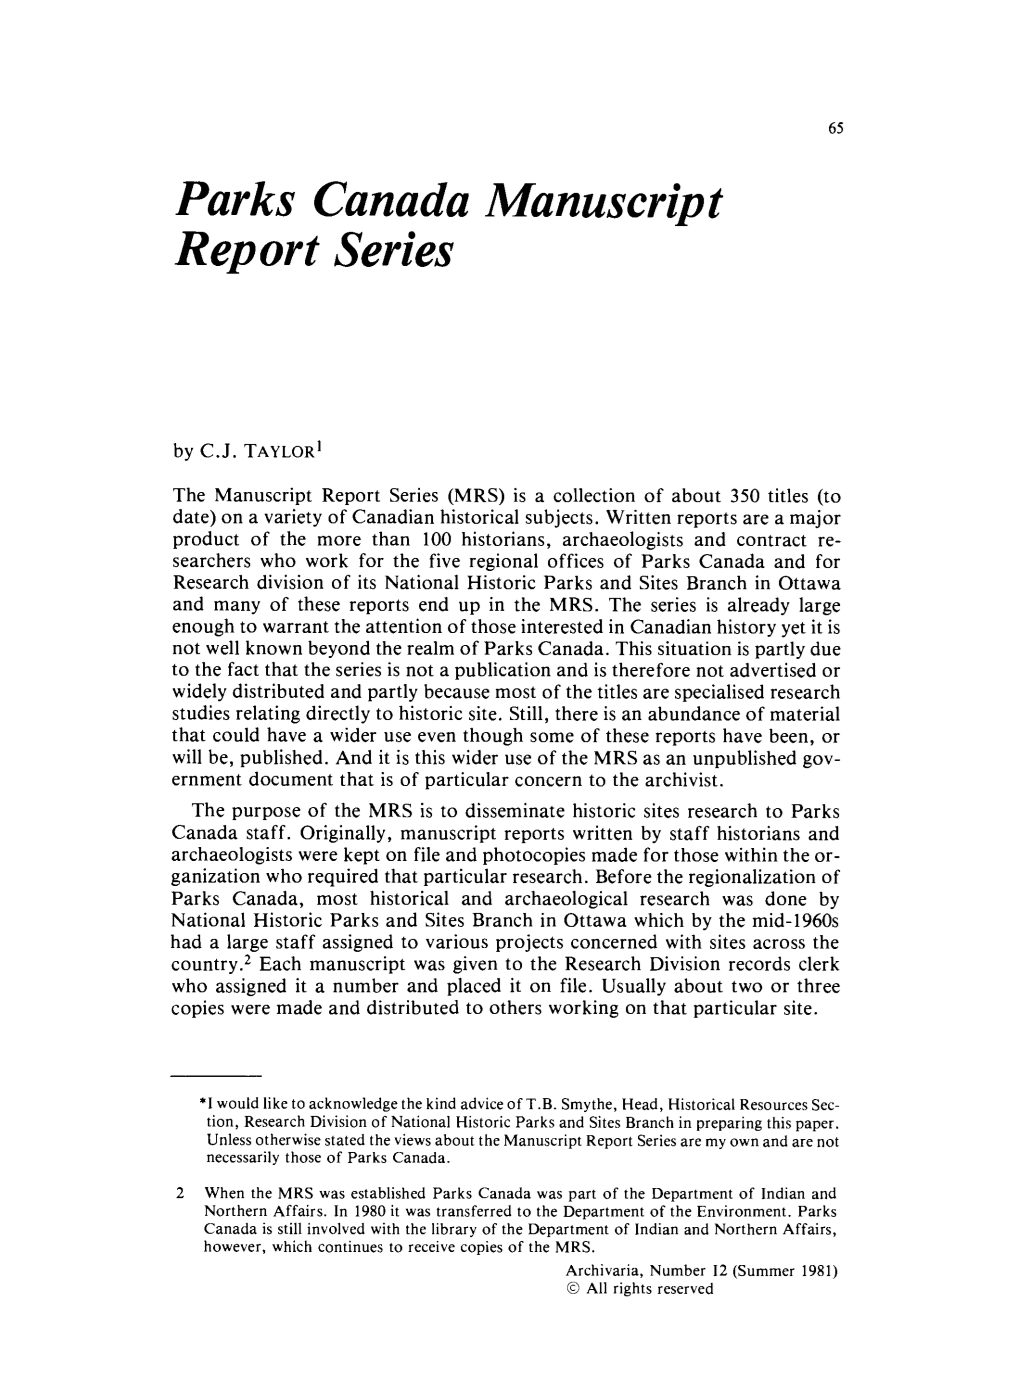 Parks Canada Manuscript Report Series